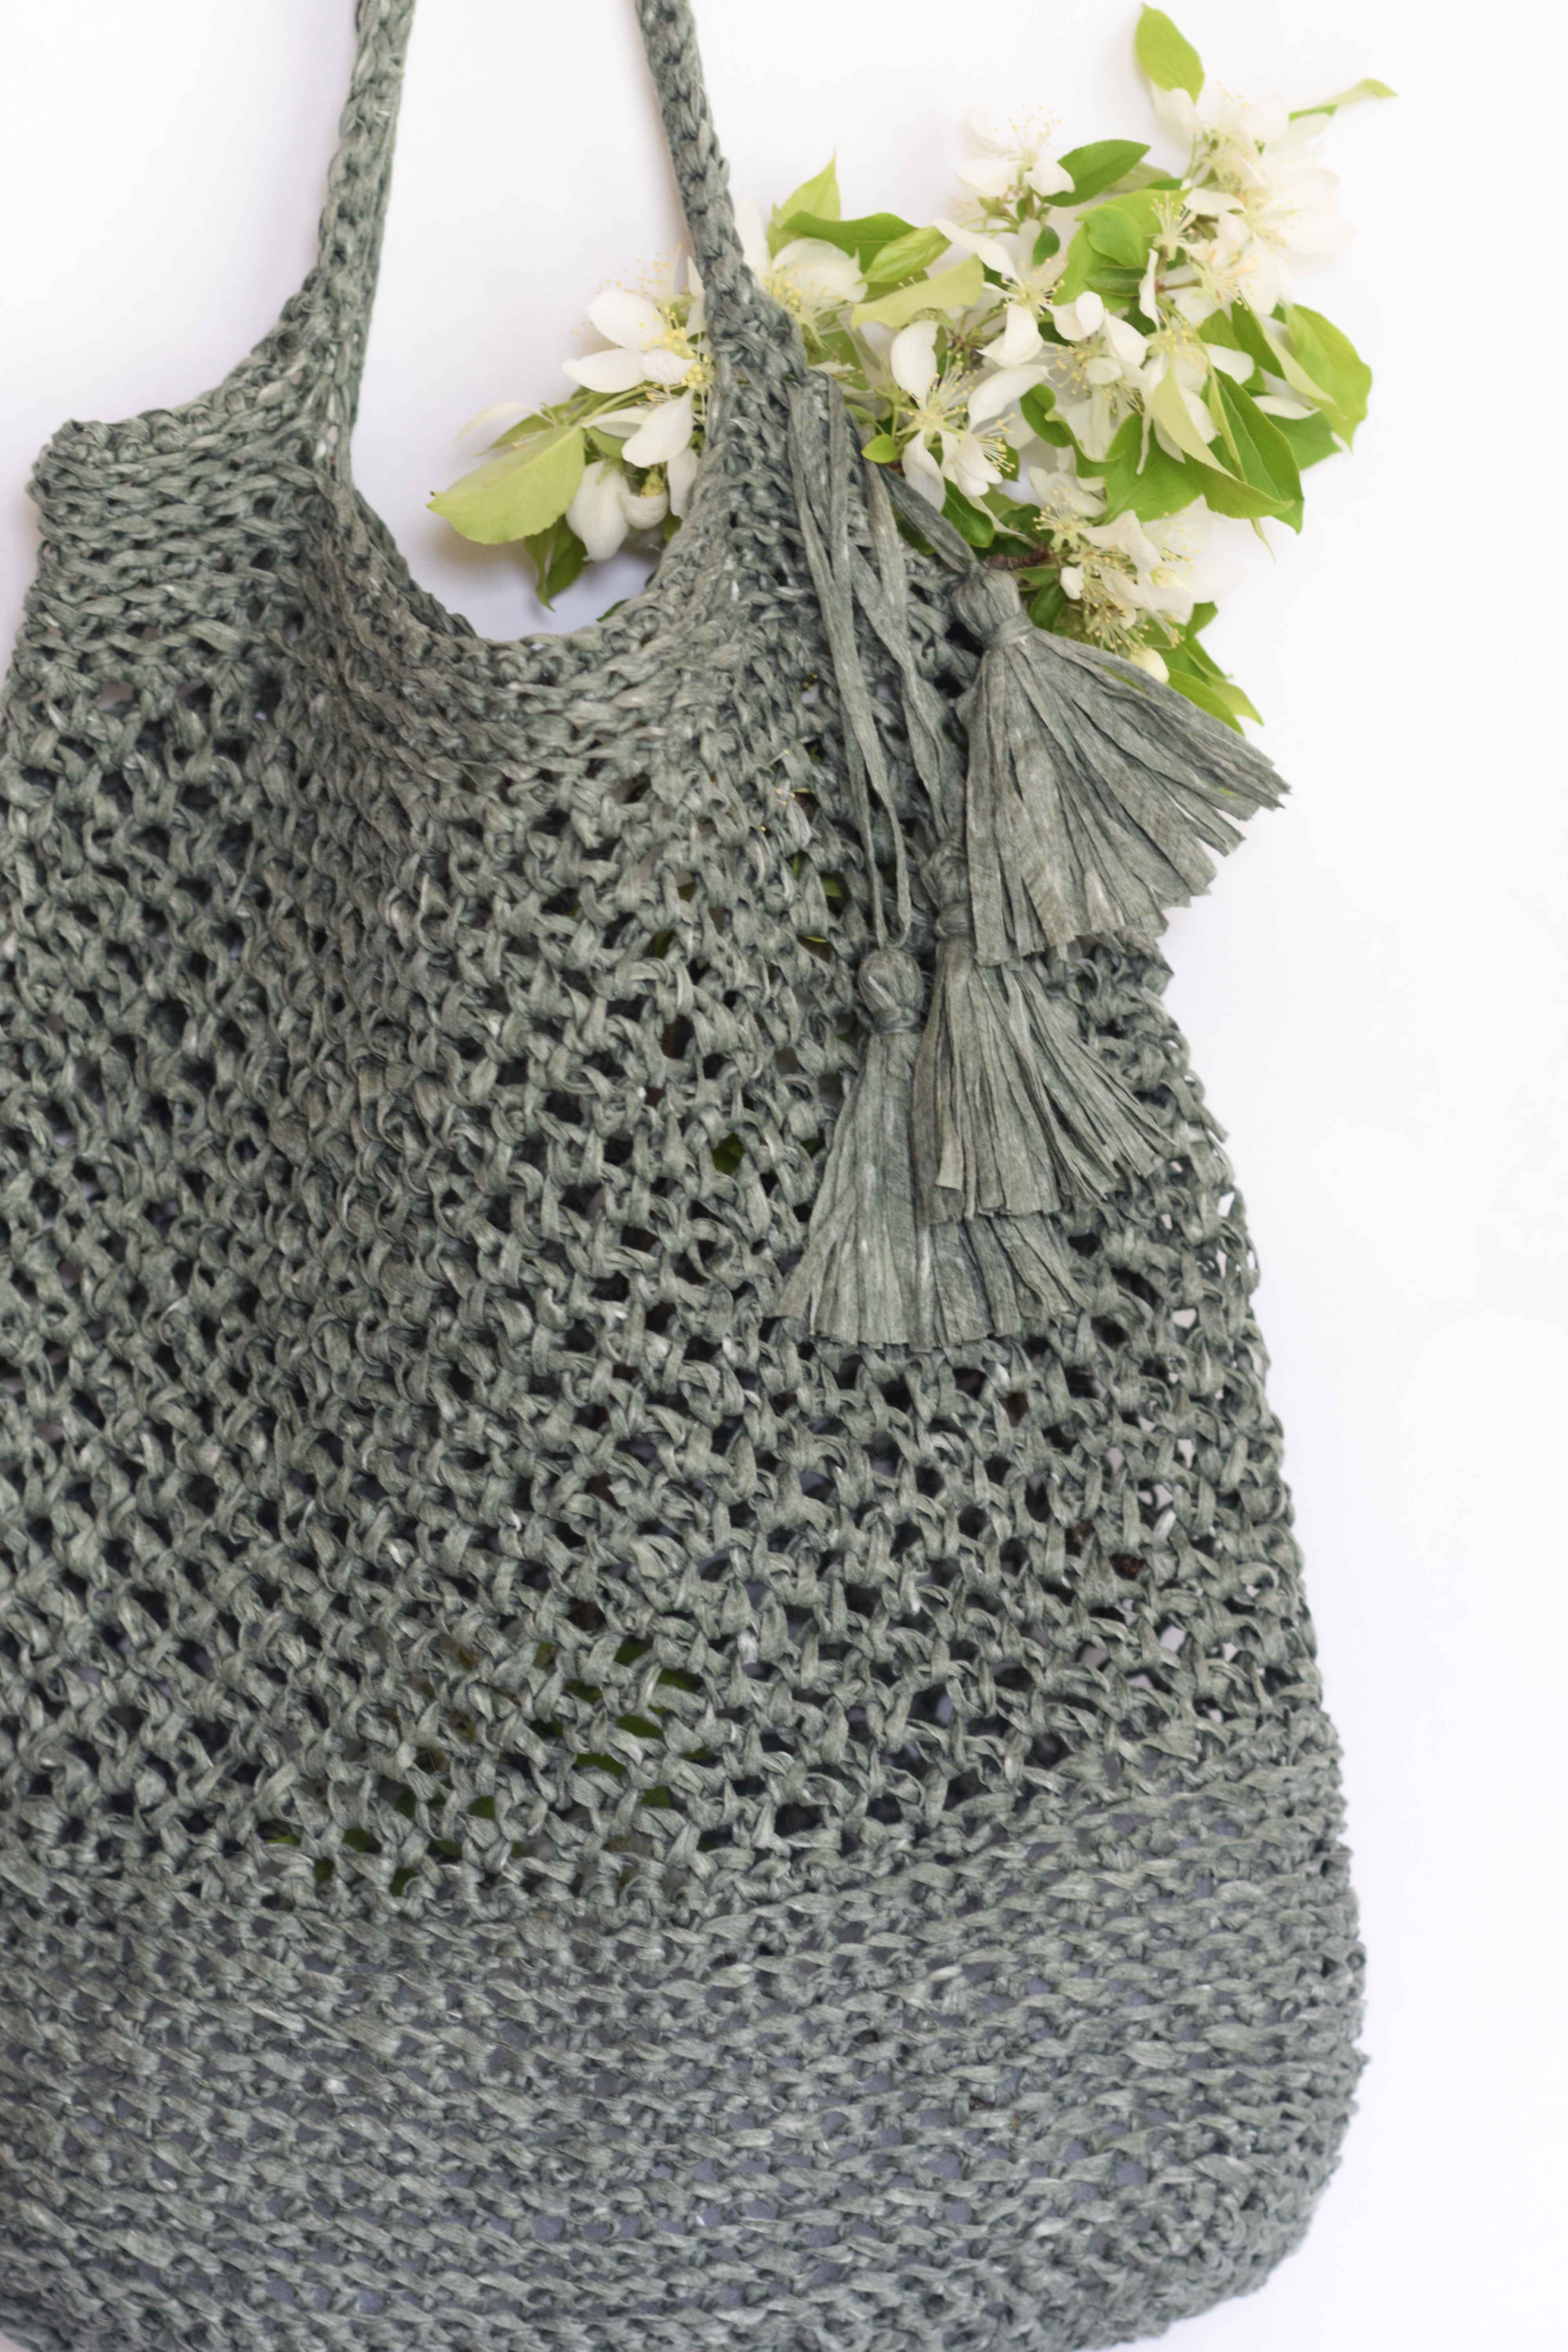 20+ Amazing Crochet Market Bags - Free Crochet Patterns